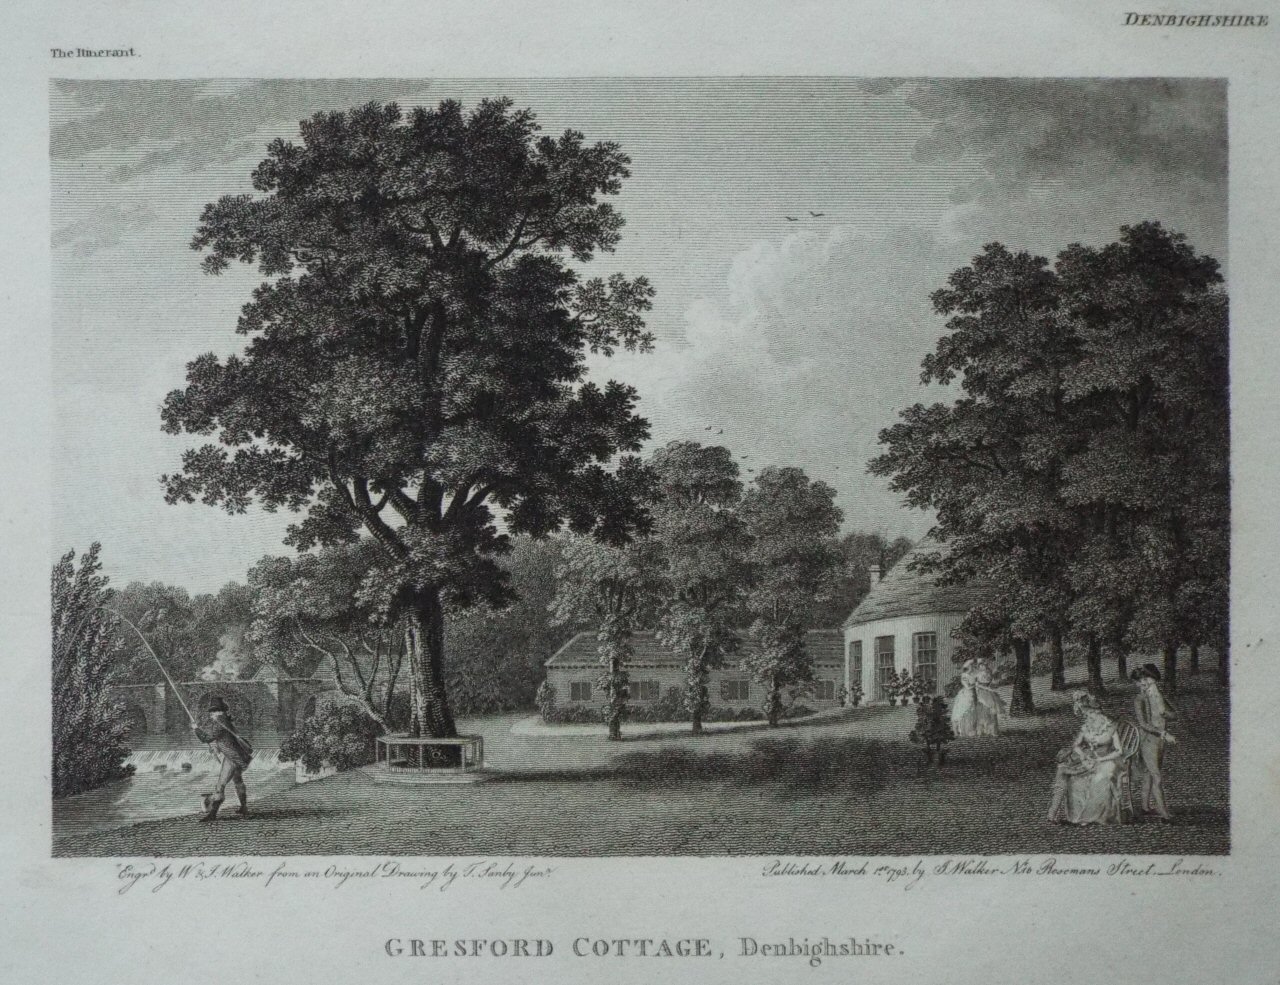 Print - Gresford Cottage, Denbighshire. - Walker